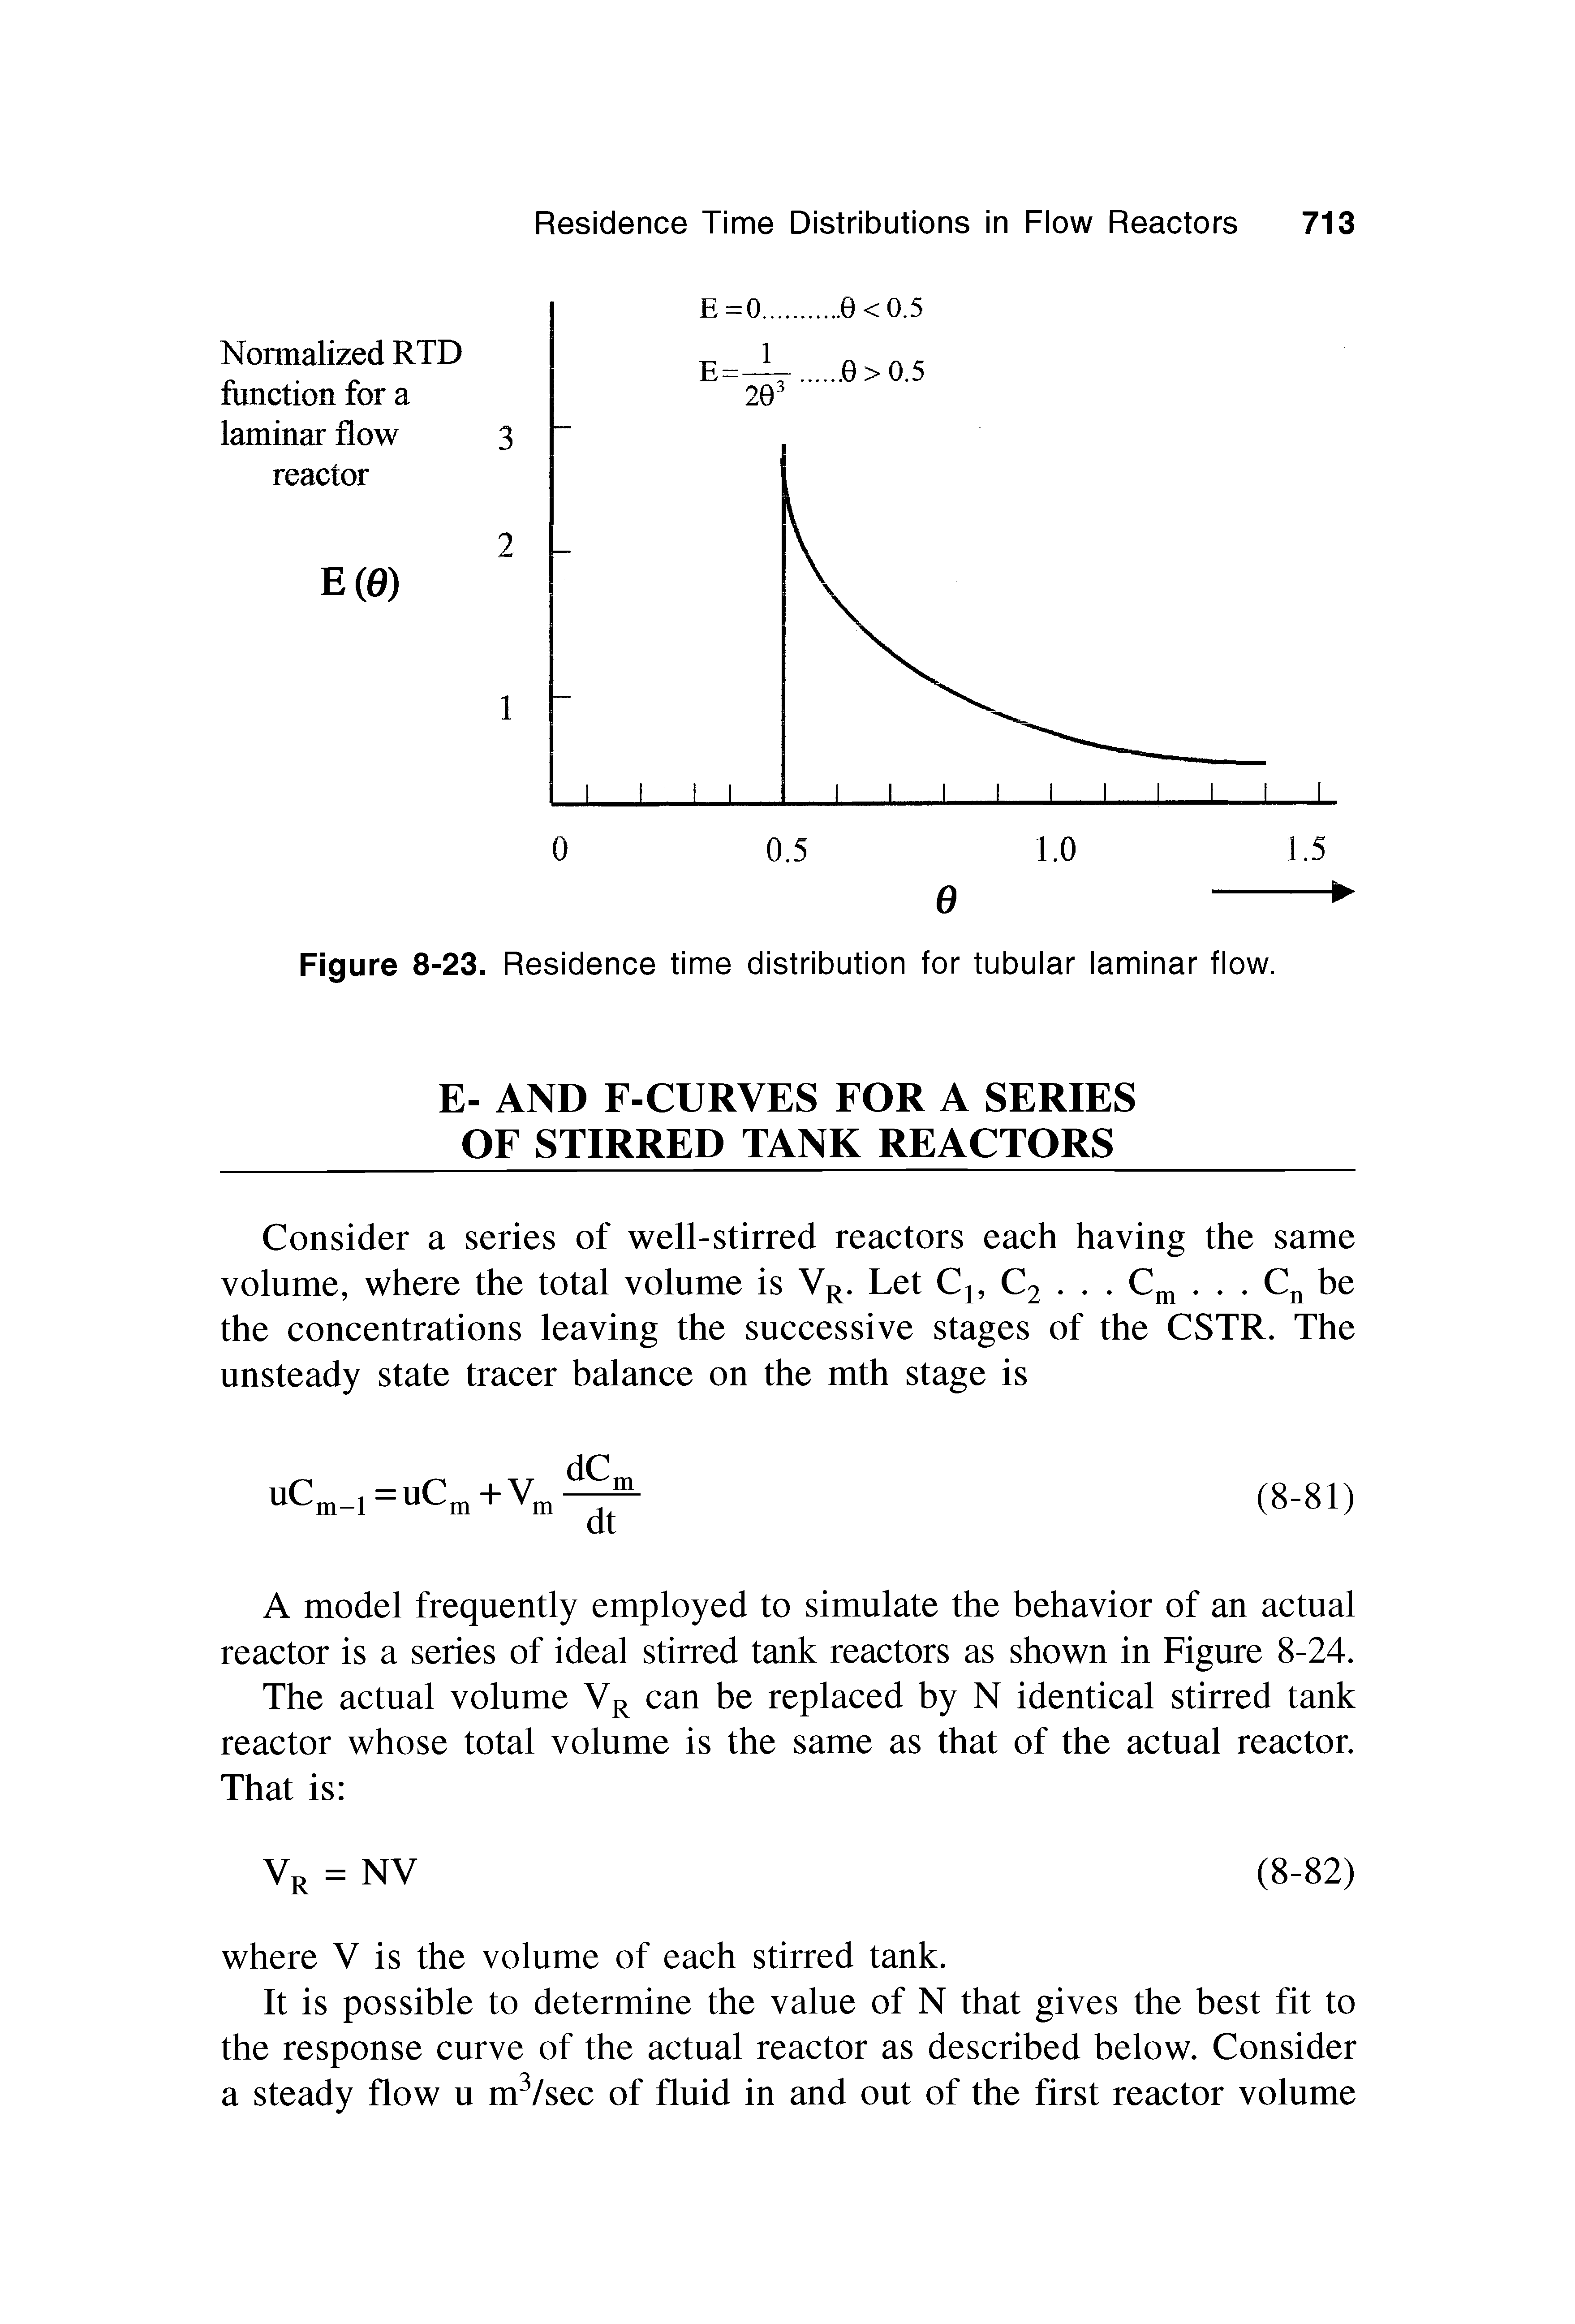 Figure 8-23. Residence time distribution for tubular laminar flow.